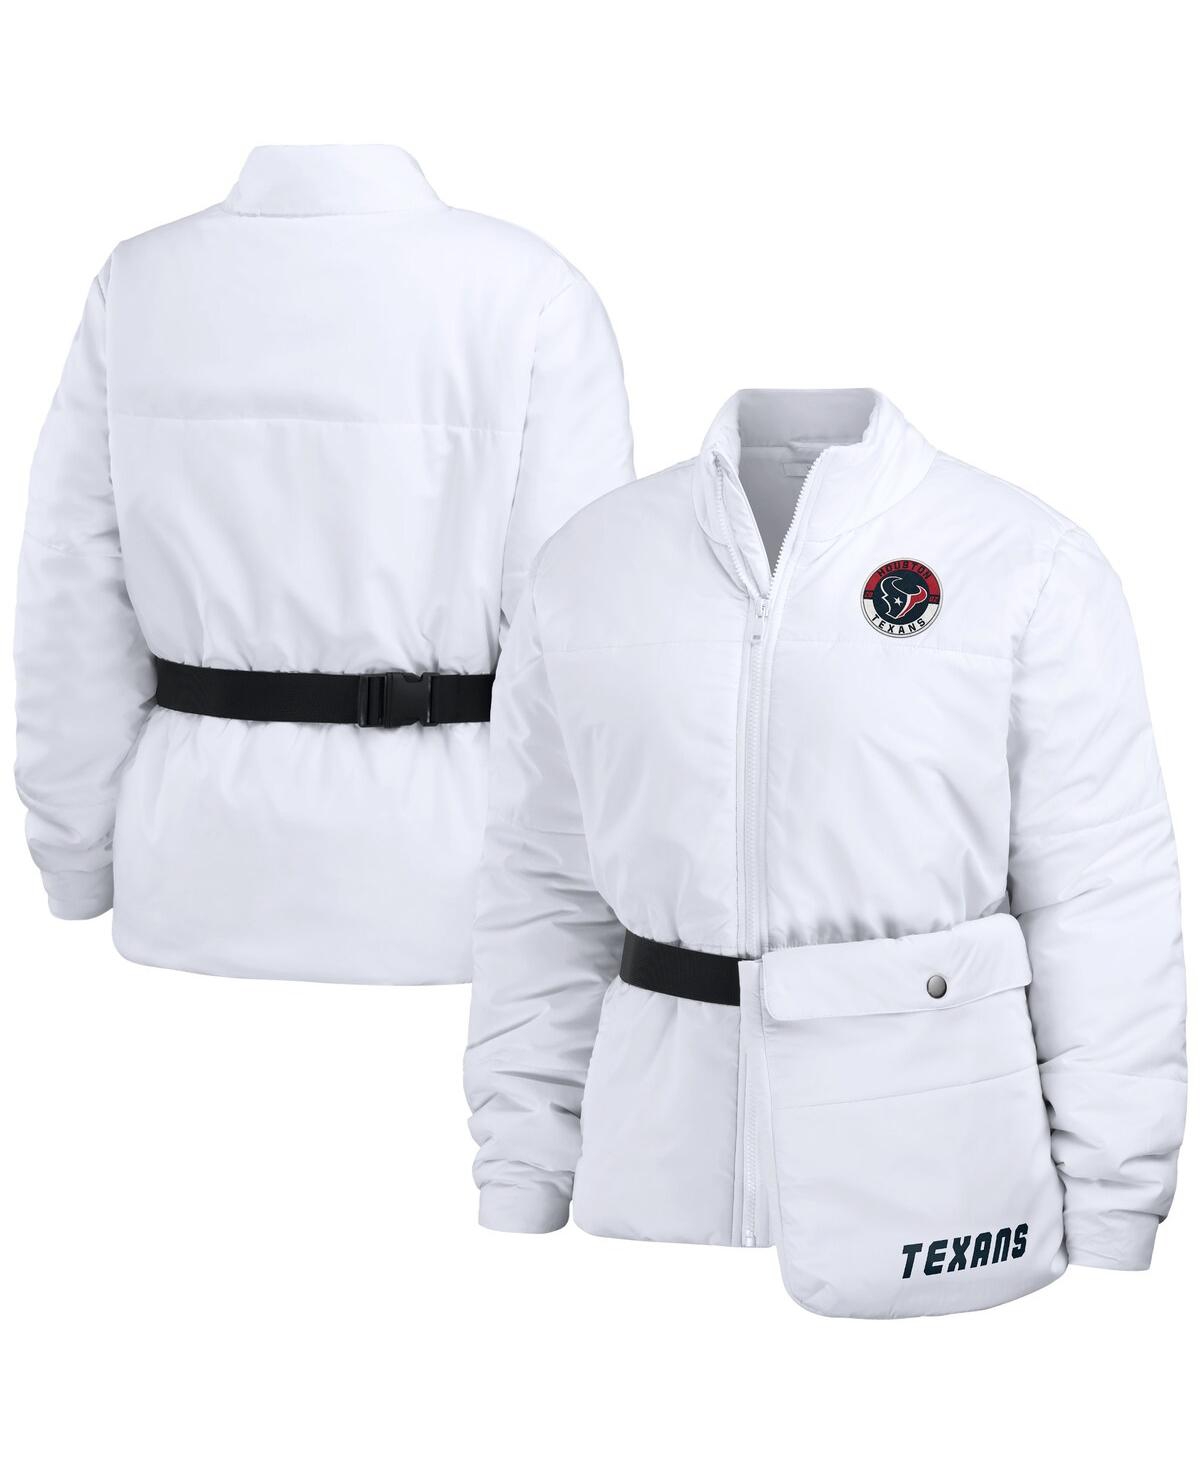 Women's Wear by Erin Andrews White Houston Texans Packaway Full-Zip Puffer Jacket - White